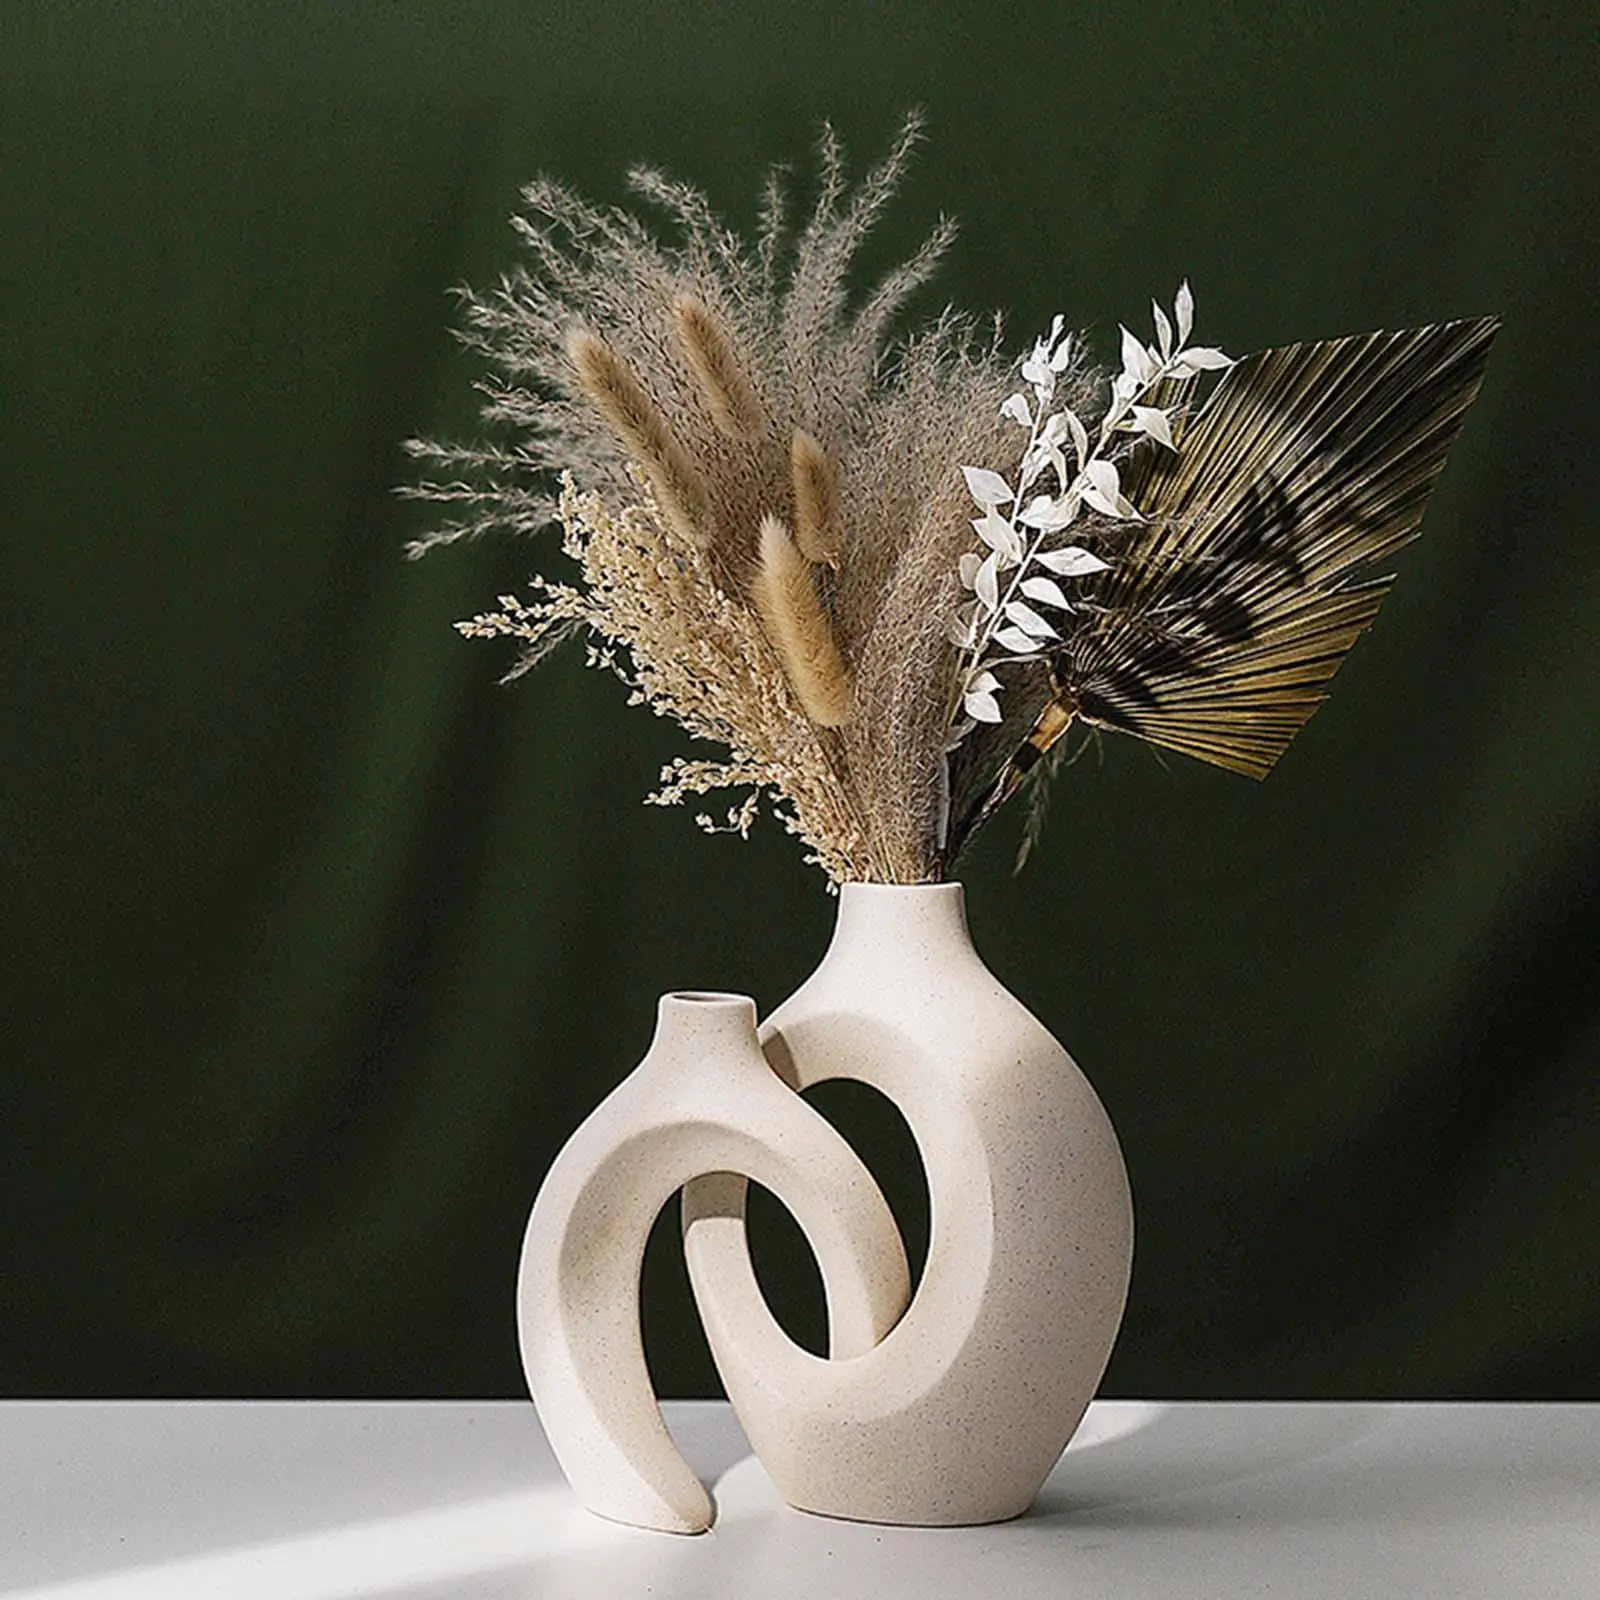 2x Ceramic Vase Flower Arrangement Flower Pot Ornament Craft Desktop Vase Decorative Bud Vase for Home Gift Anniversary Hall